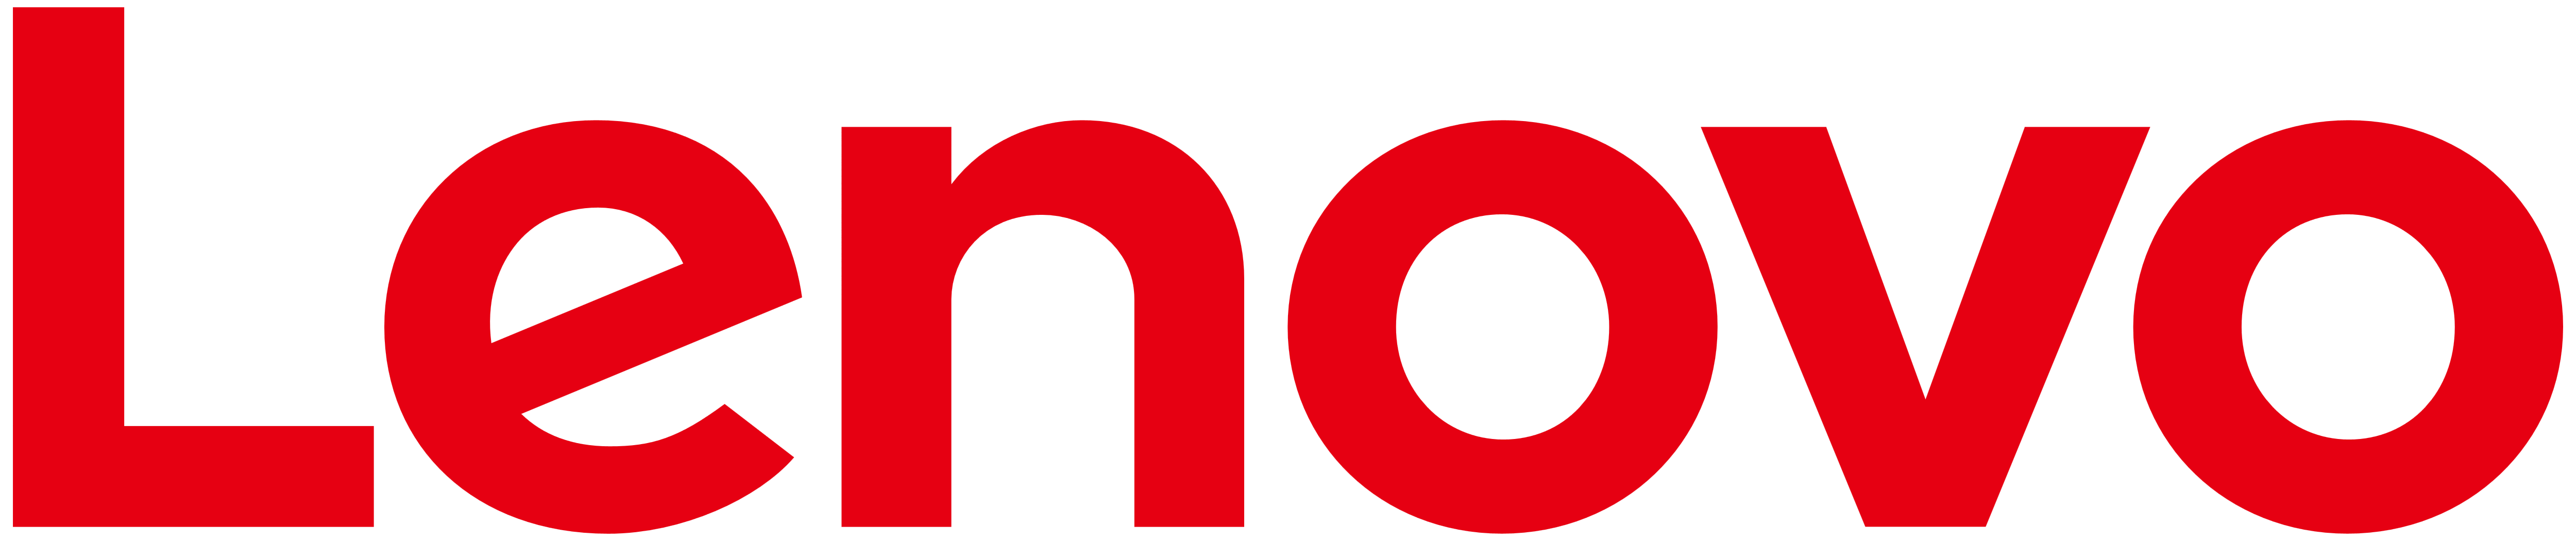 Red Lenovo Logo - Lenovo – Logos Download